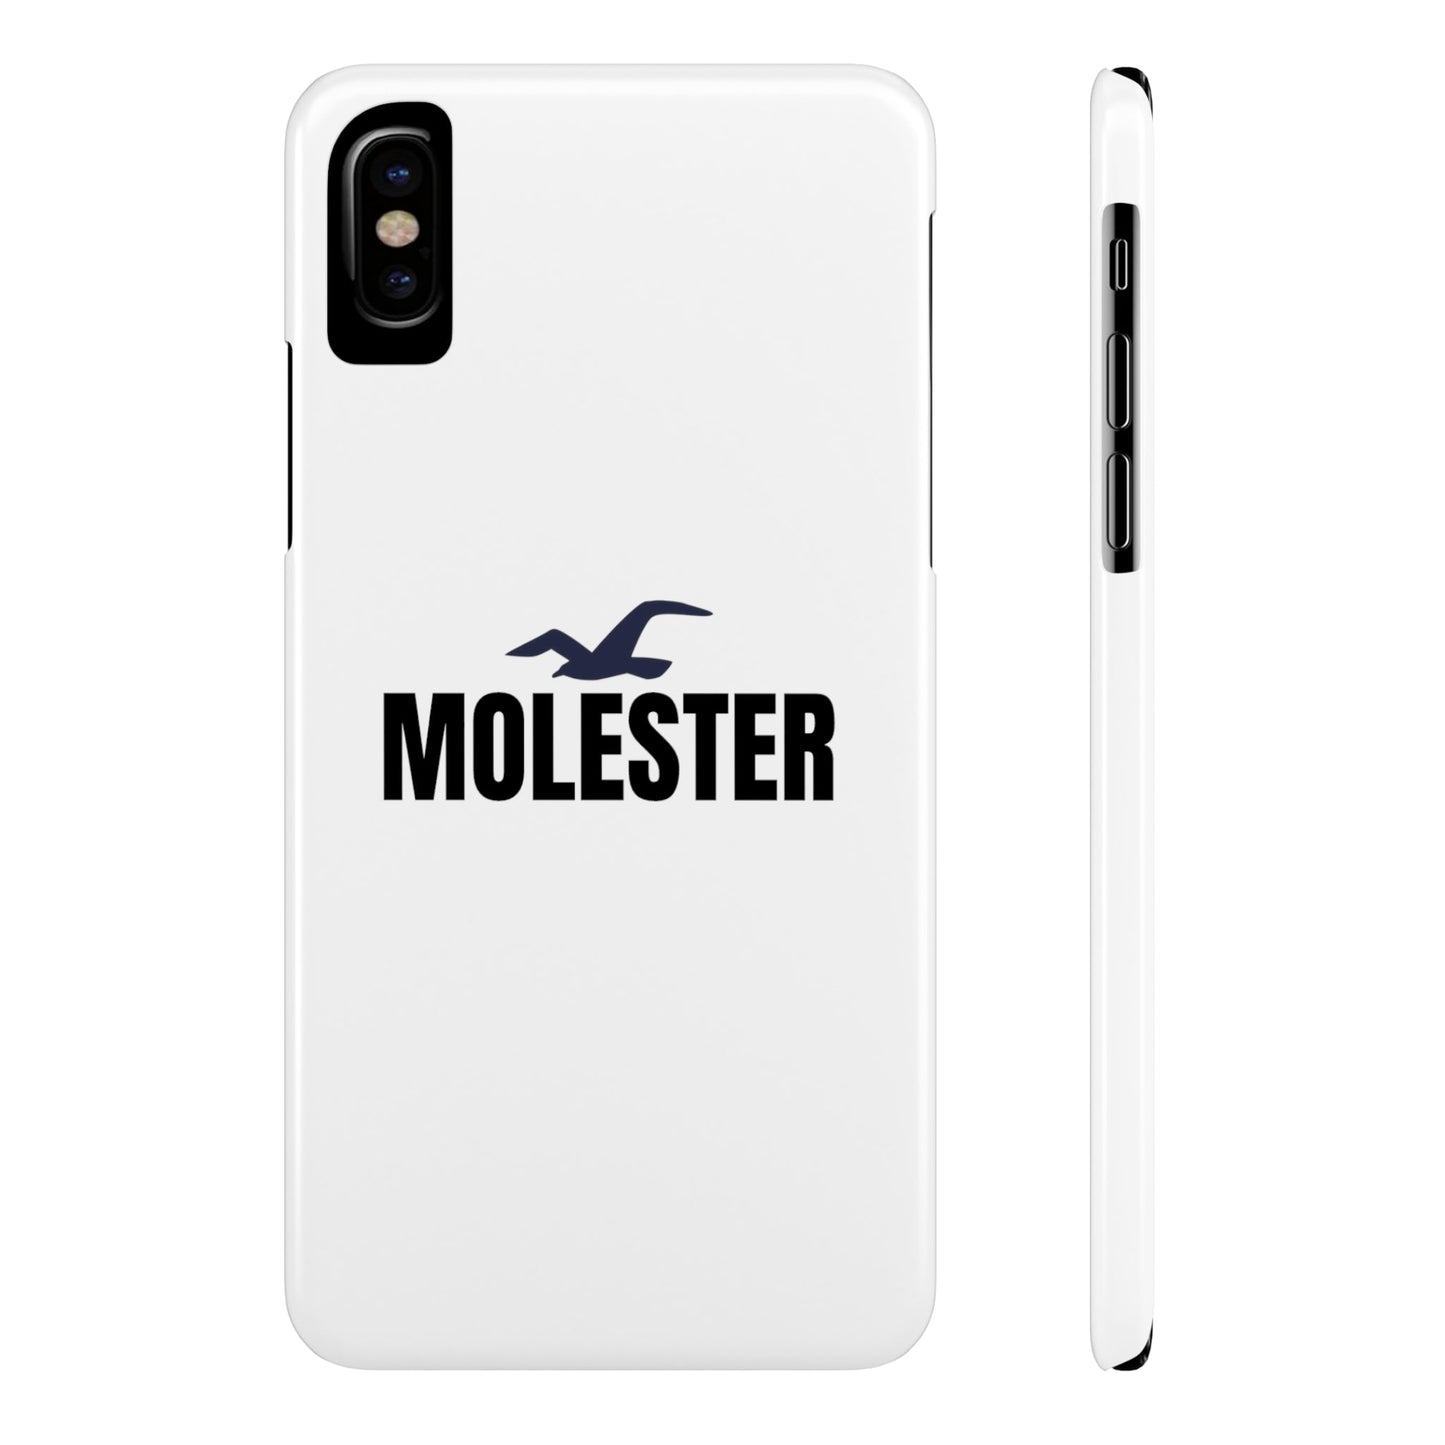 "Molester" MagStrong Phone Case iPhone X Slim